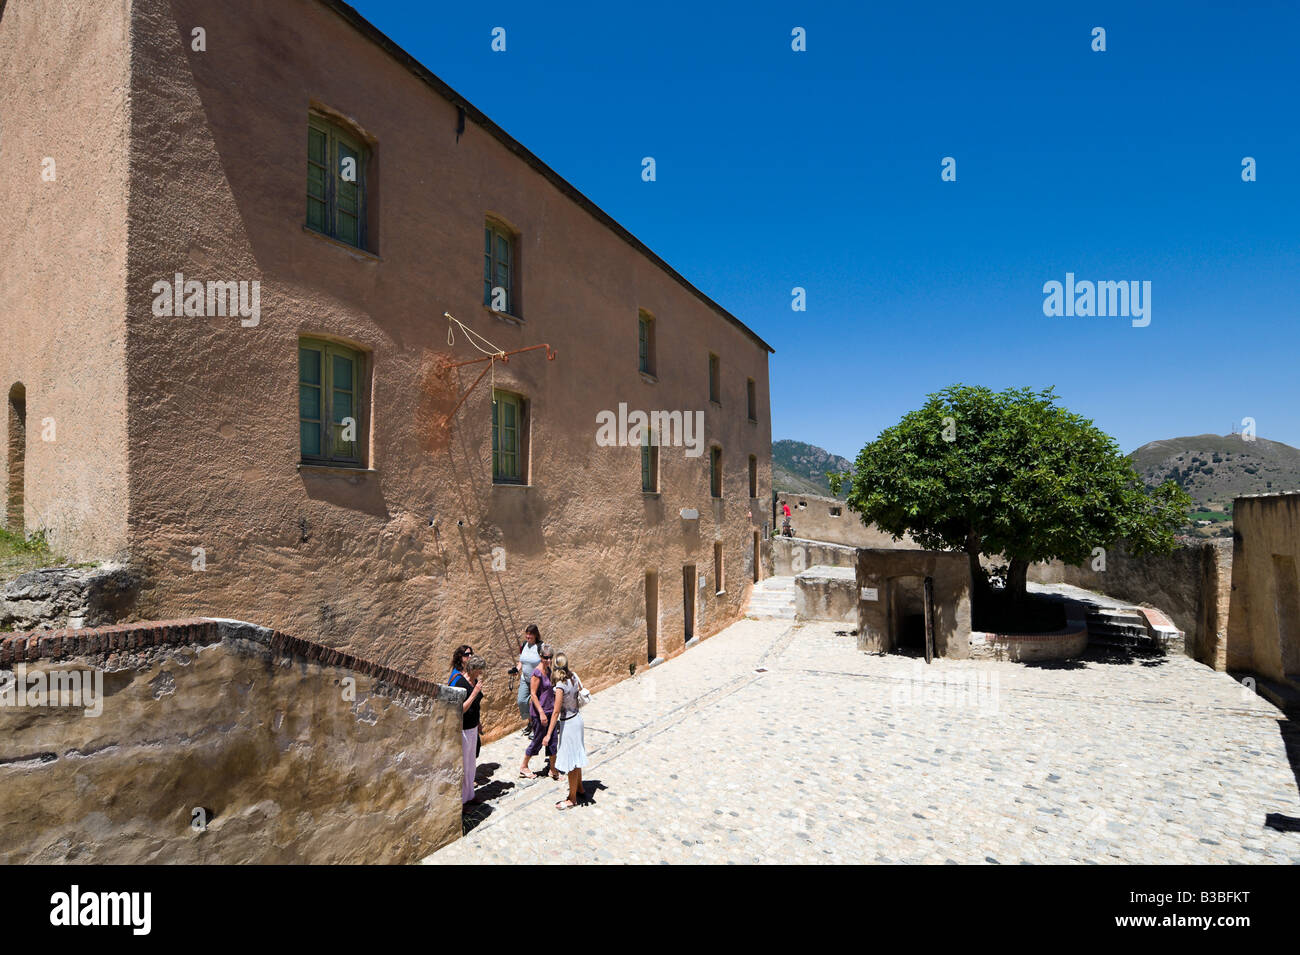 Alte Kaserne in der Citadelle, Haute-Ville (Altstadt), Corte (ehemalige Hauptstadt des unabhängigen Corsica), Zentral-Korsika, Frankreich Stockfoto